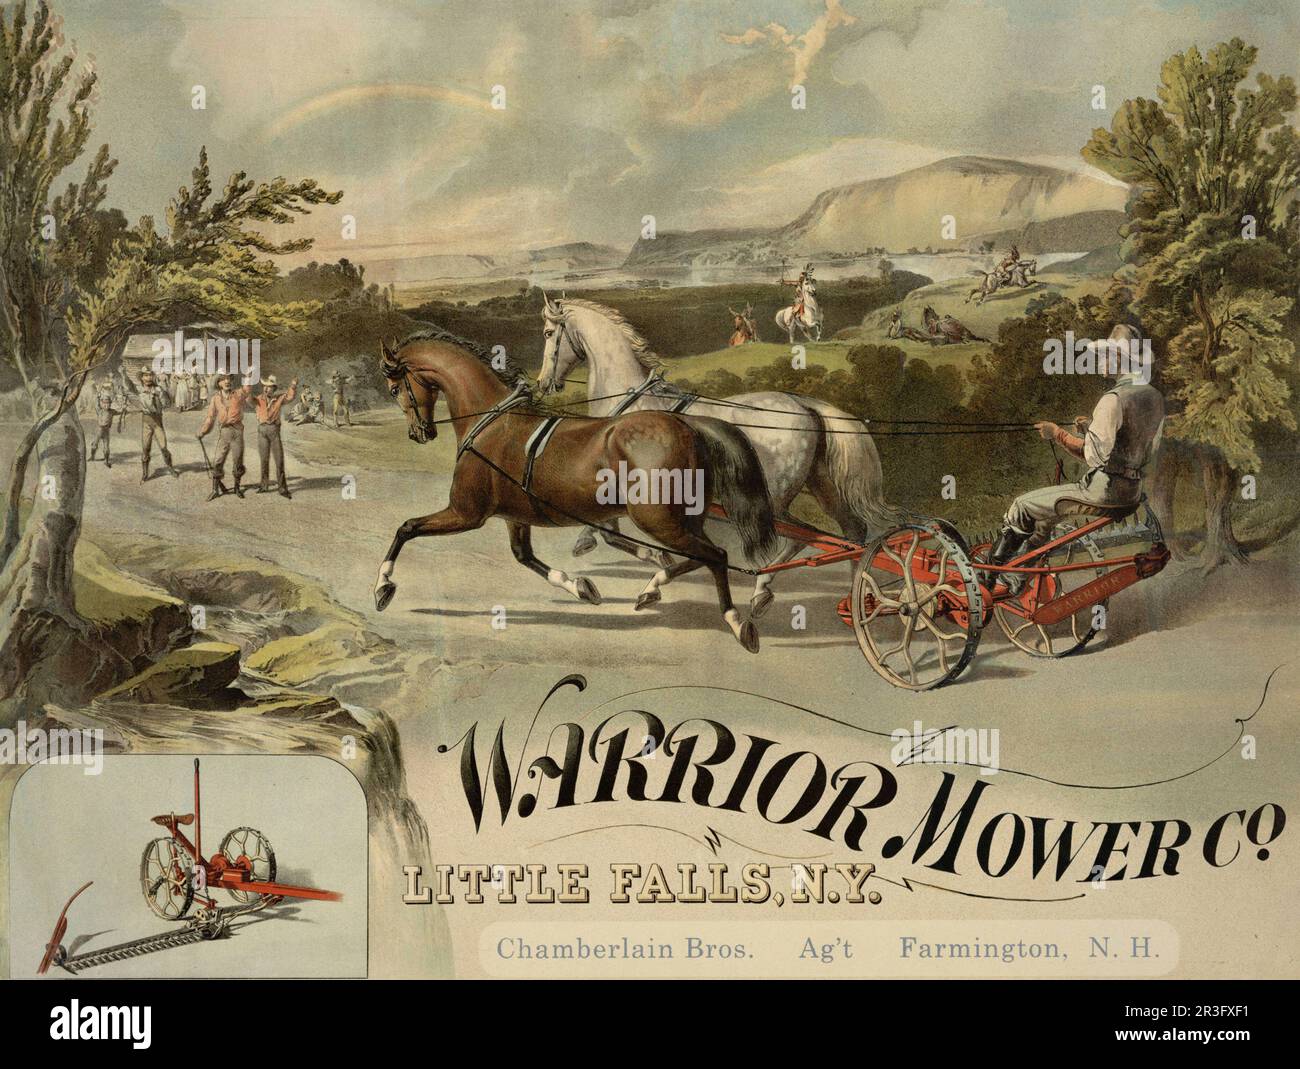 Vintage-Werbung für Warrior Mower Company, Little Falls, N.Y. Stockfoto